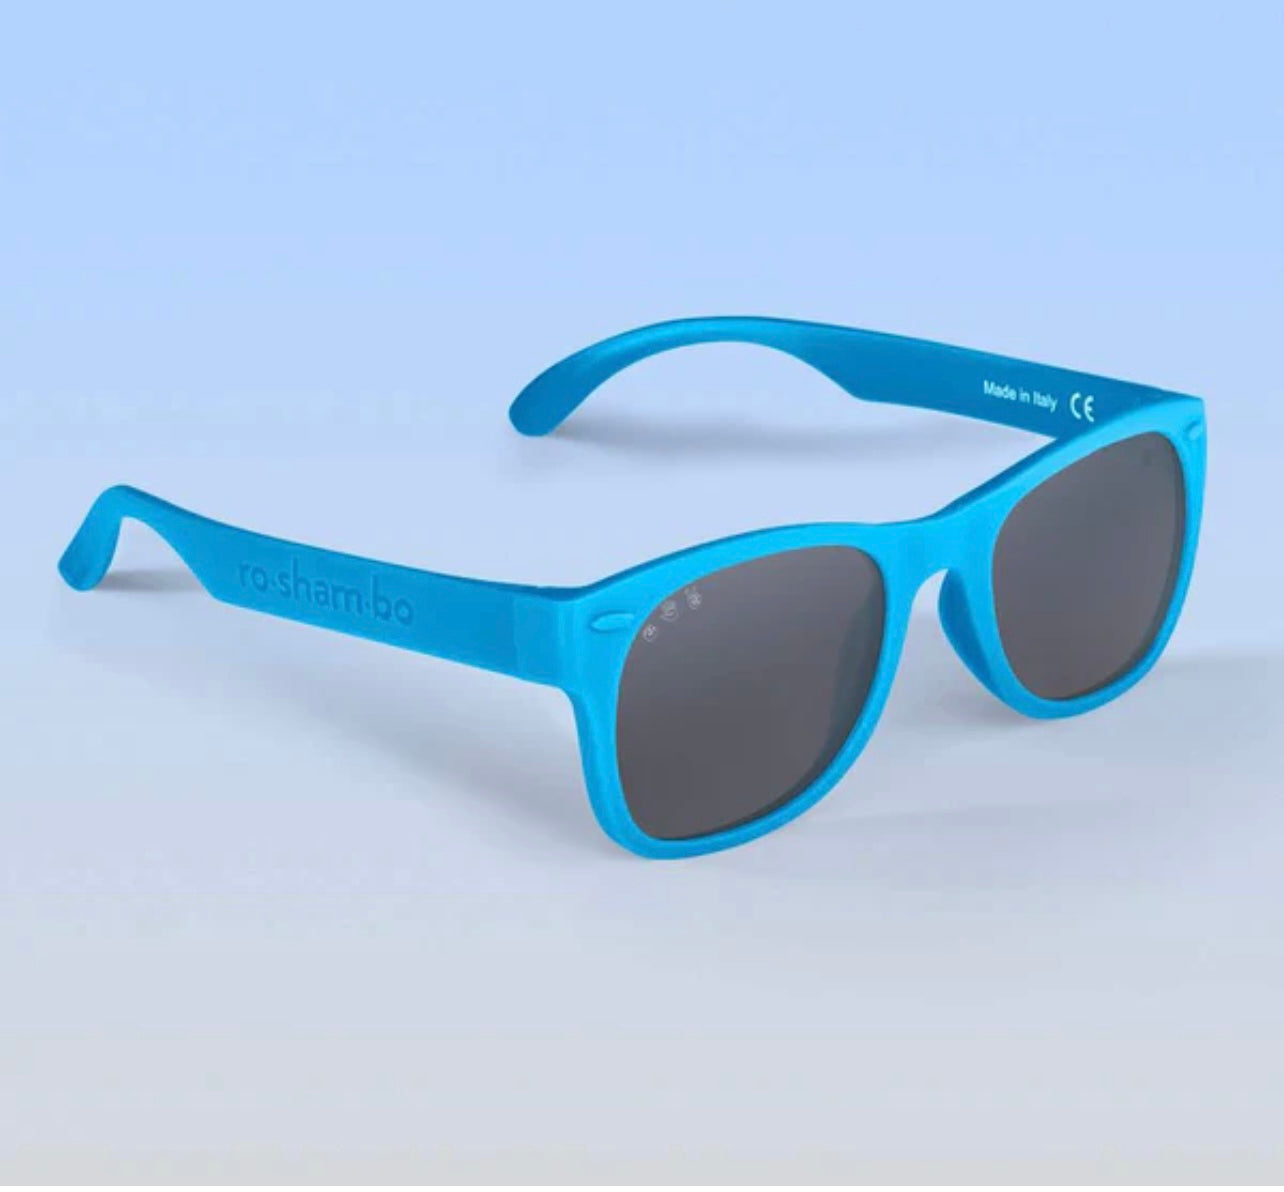 Roshambo Baby Sunglasses - Zach Morris Blue, Mirrored Chrome Lens